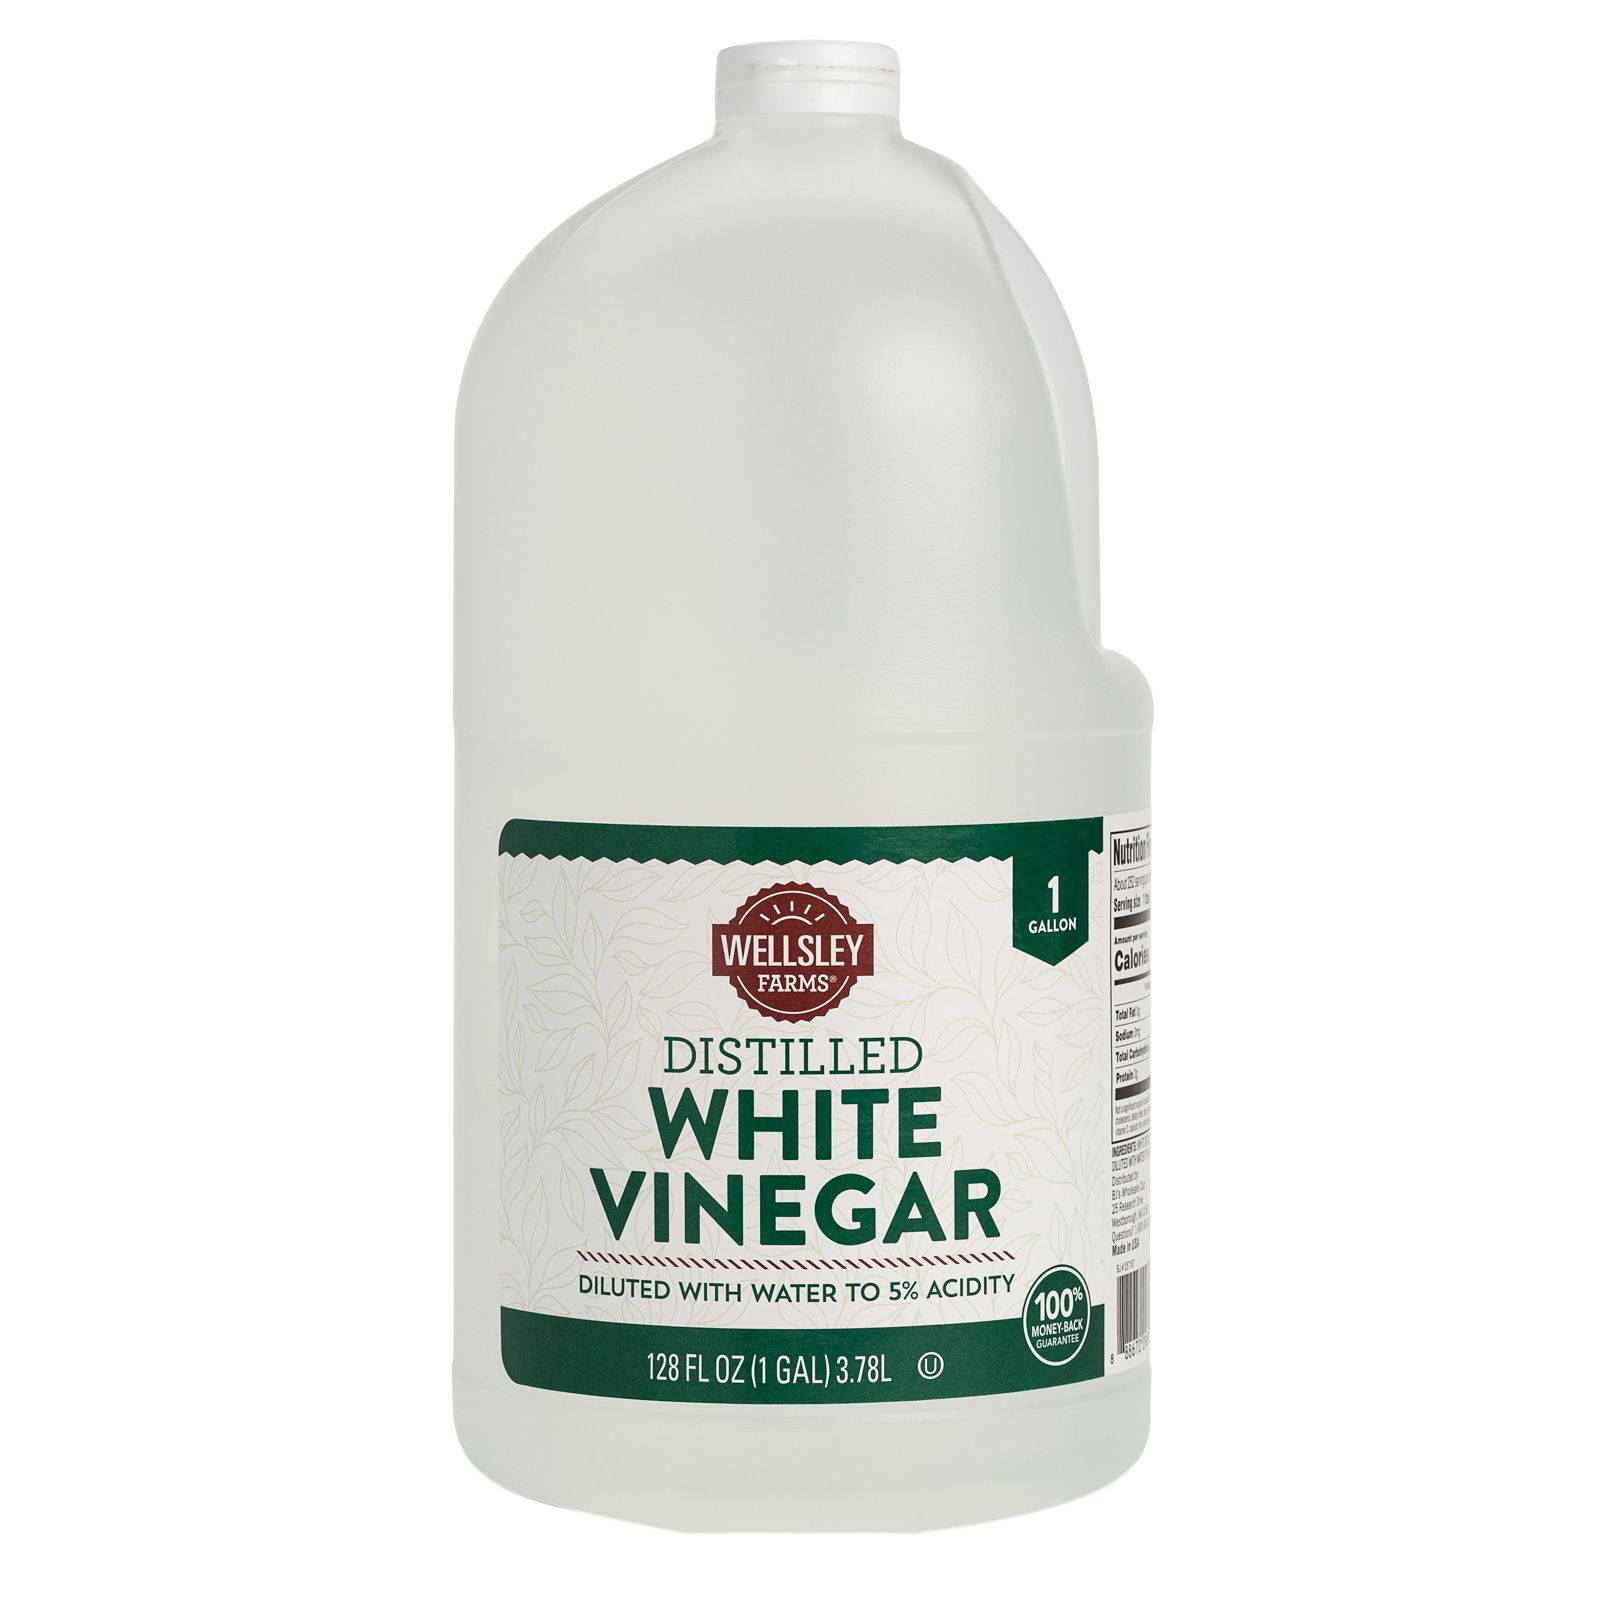 Discounted Vinegar Deals